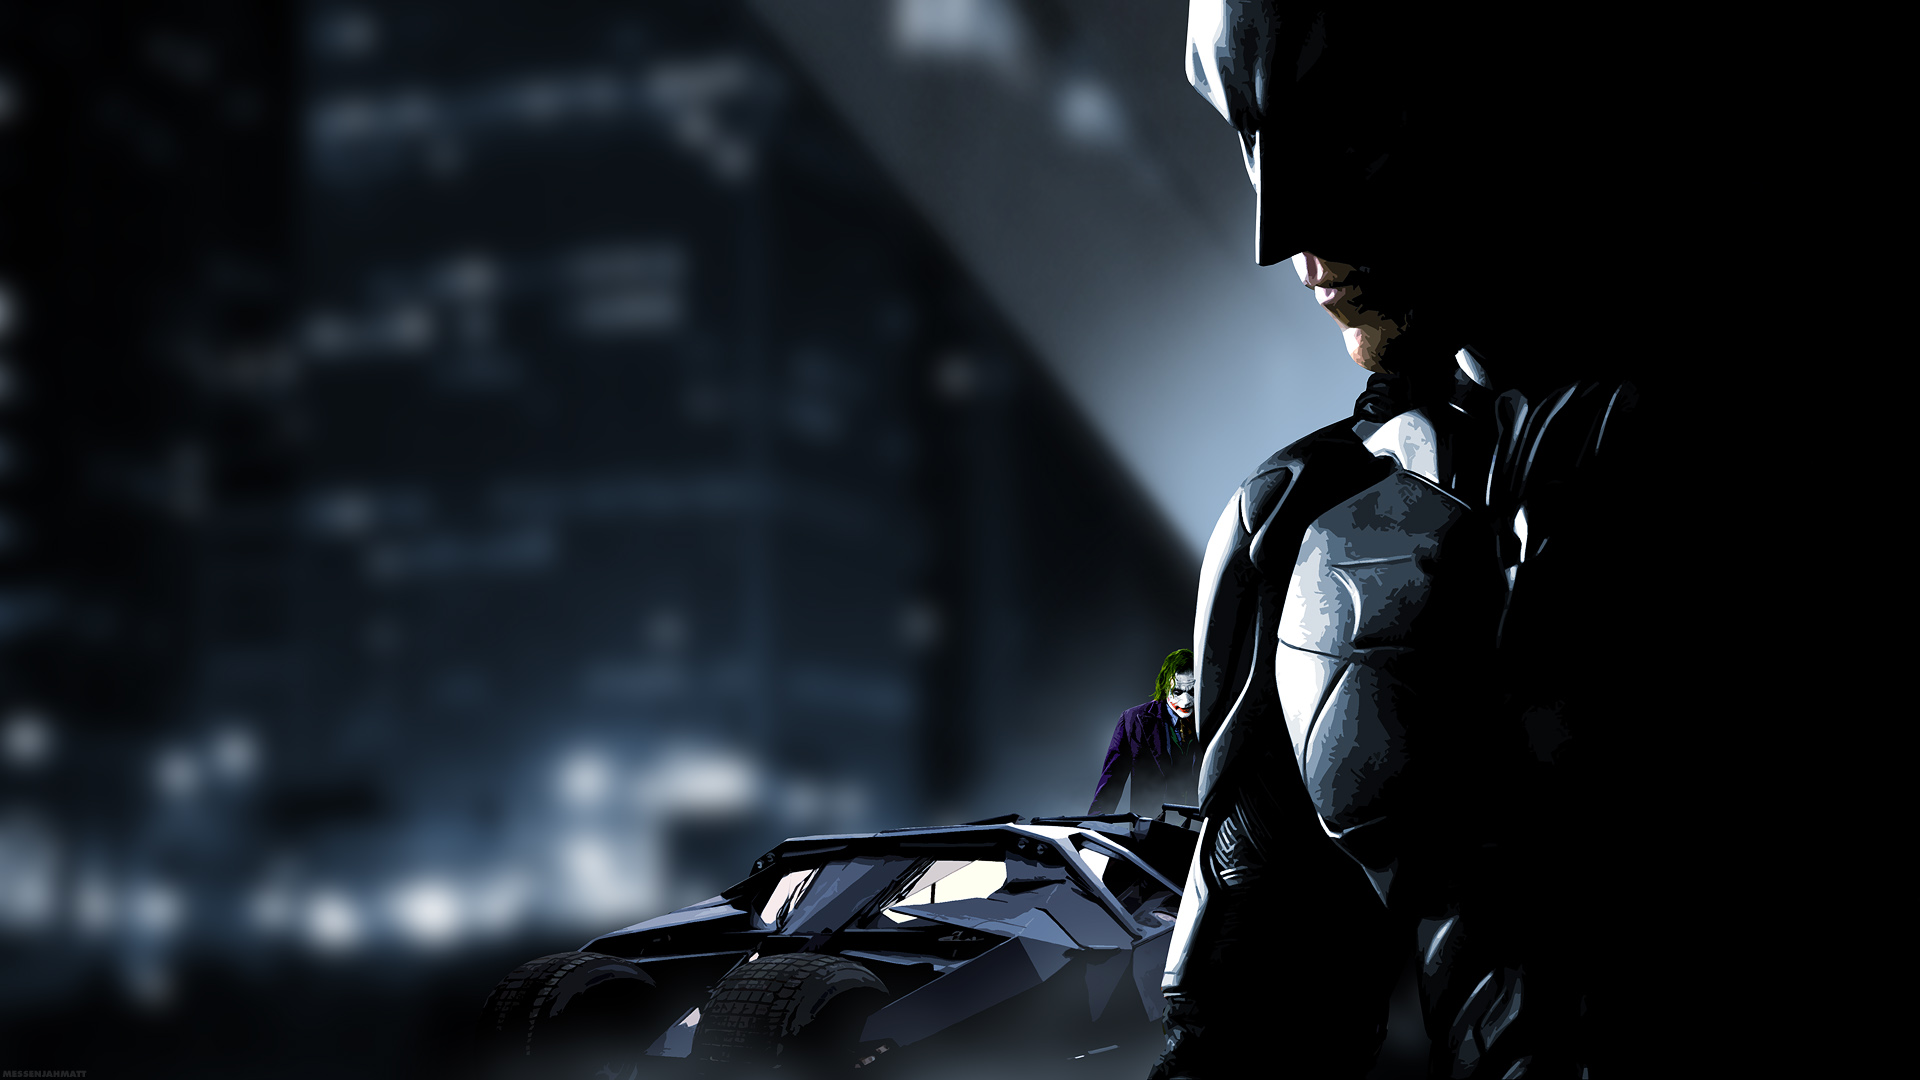 batman hd wallpapers for pc,batman,darkness,automotive design,fictional character,photography